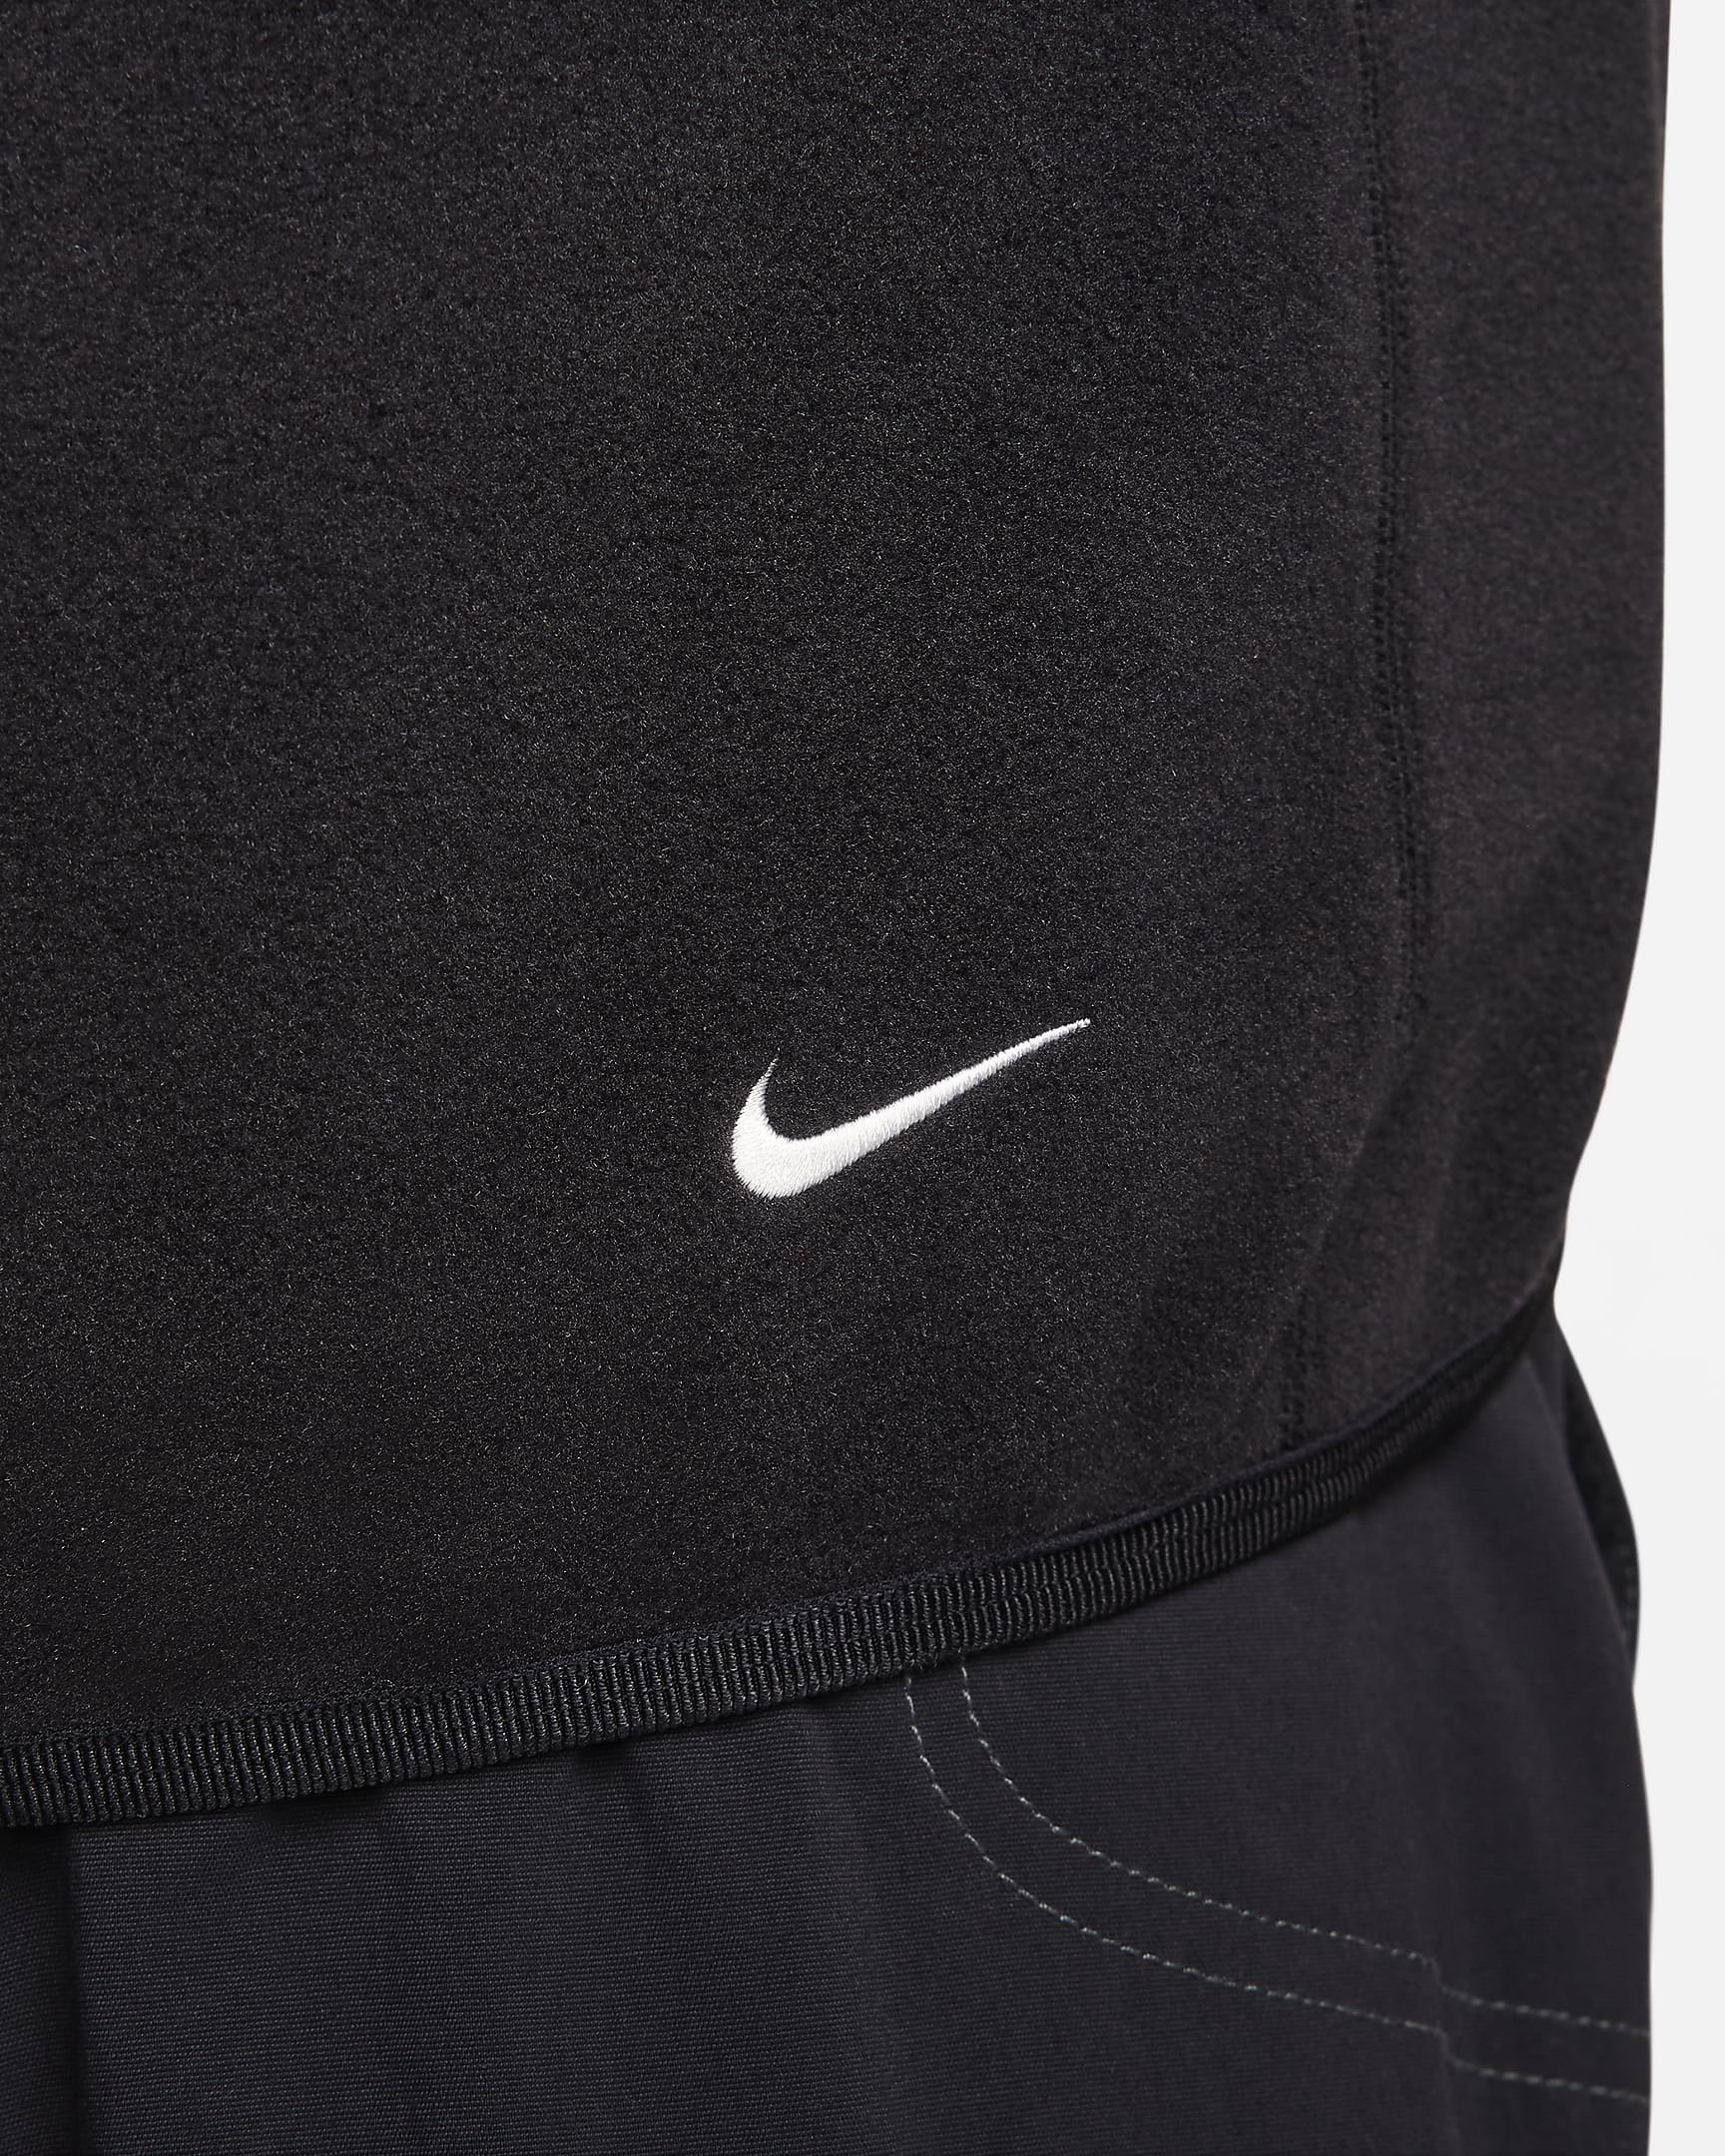 Nike ACG 'Wolf Tree' Polartec® Men's Full-Zip Top. Nike BG